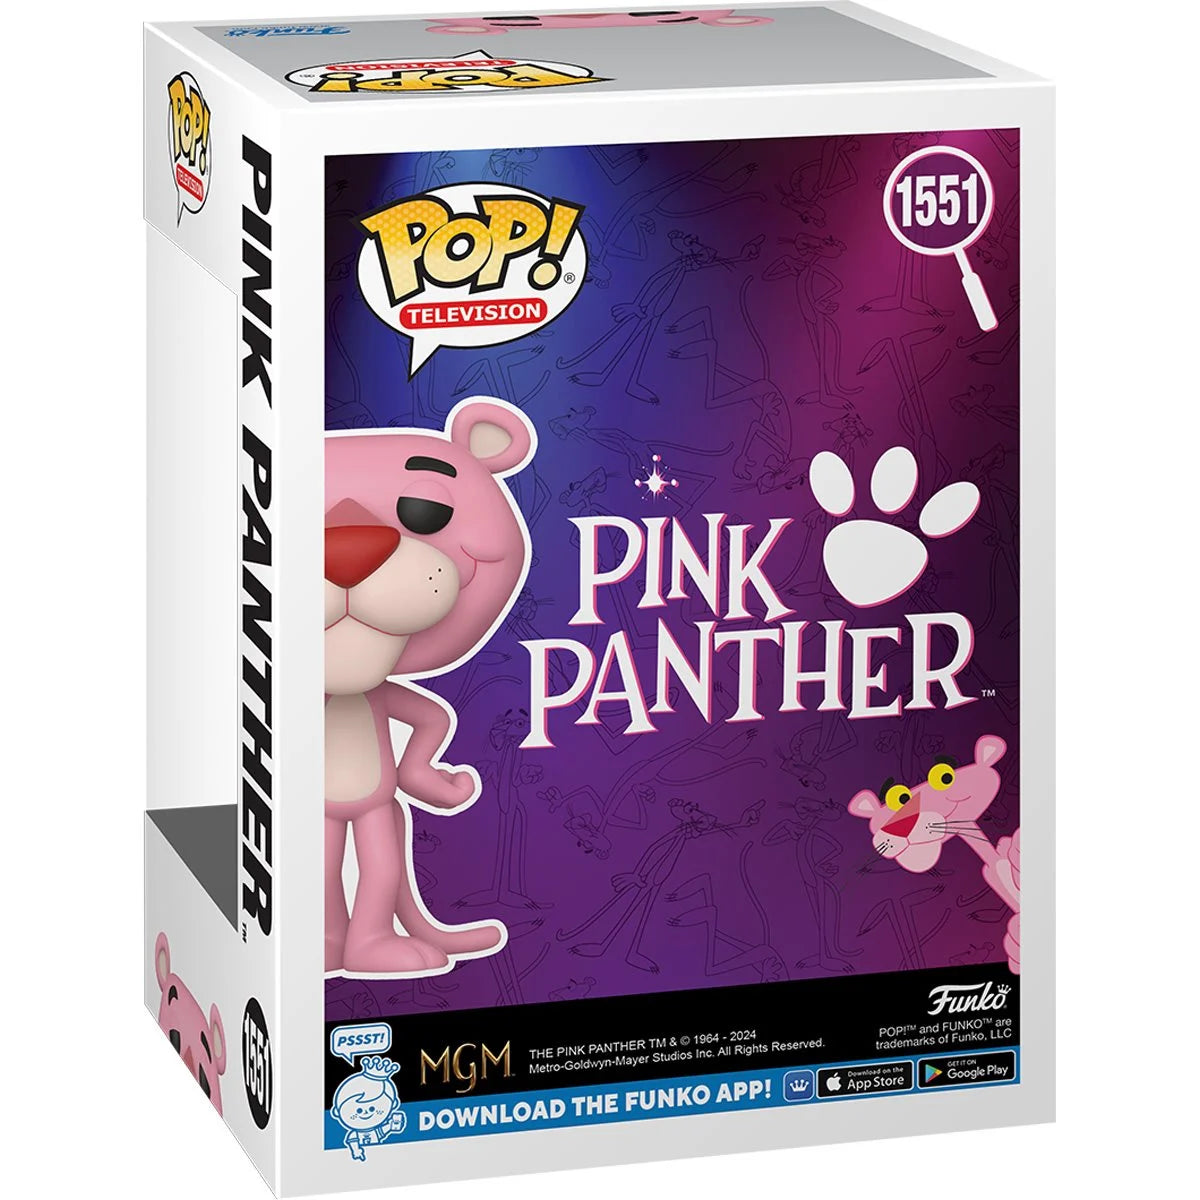 Funko Pop! Pink Panther Smiling Vinyl Figure #1551